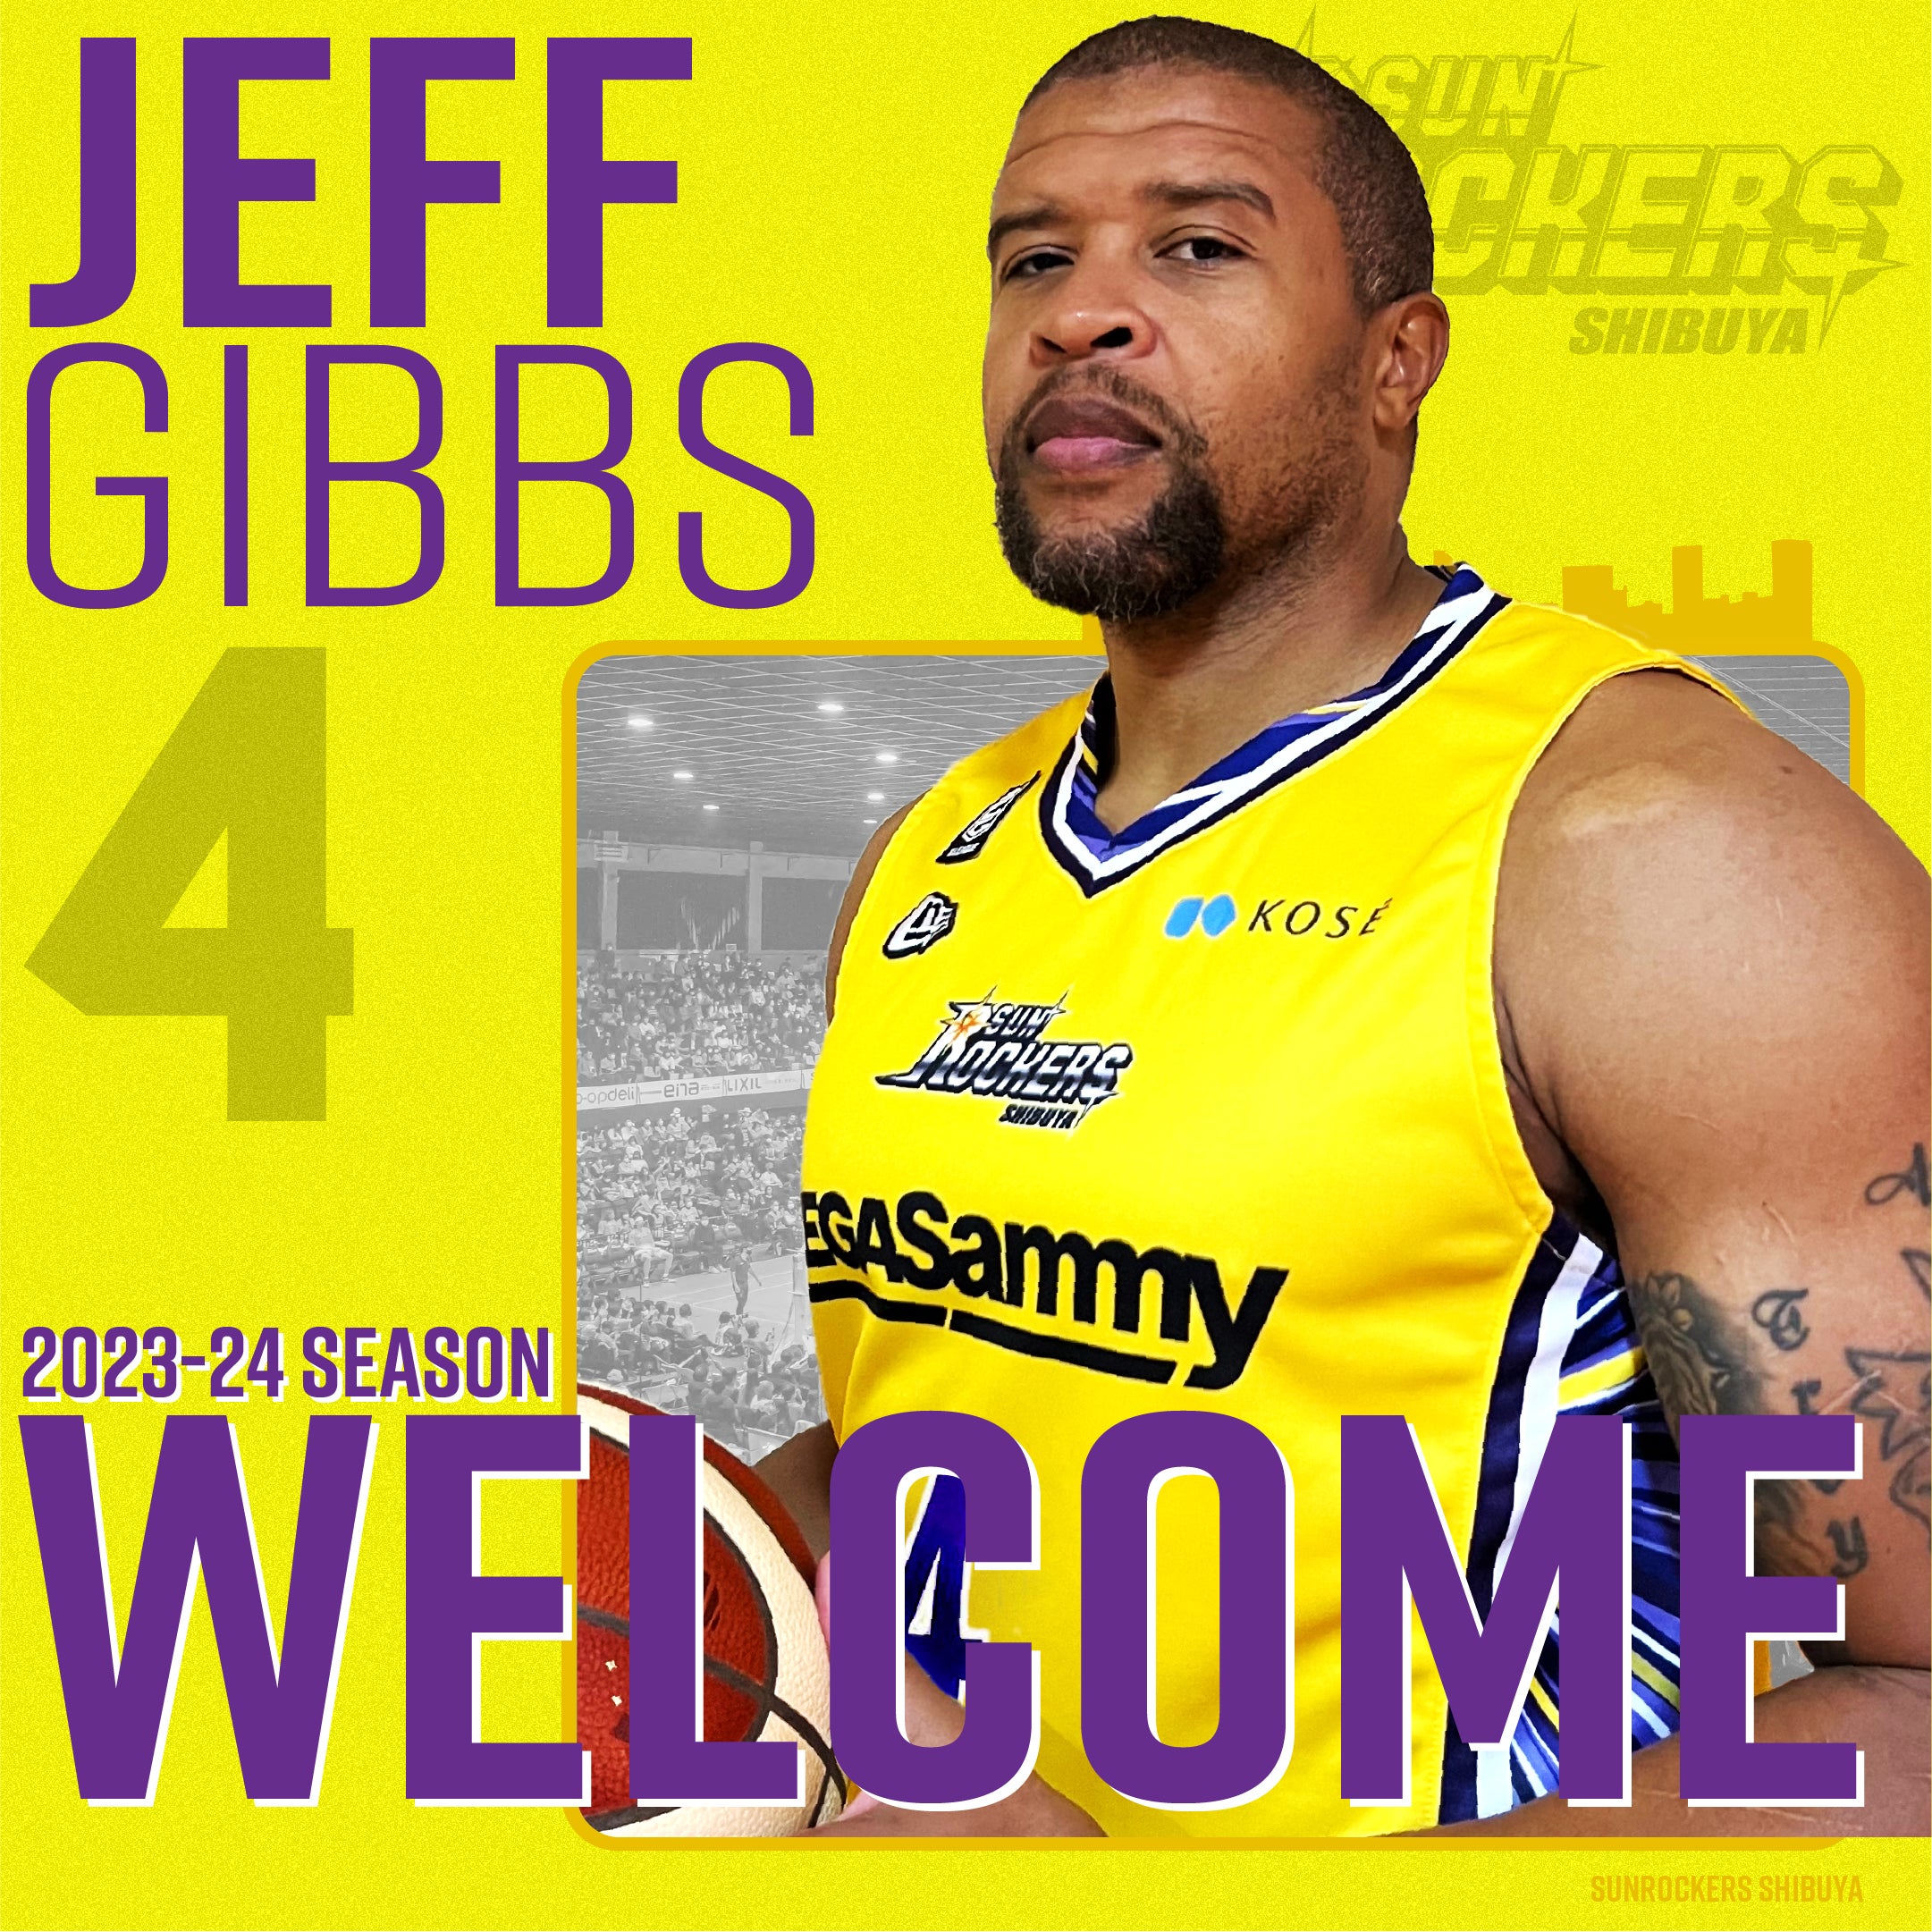 Sunrockers Shibuya Signs Jeff Gibbs for 2023-24 Season - World Today News